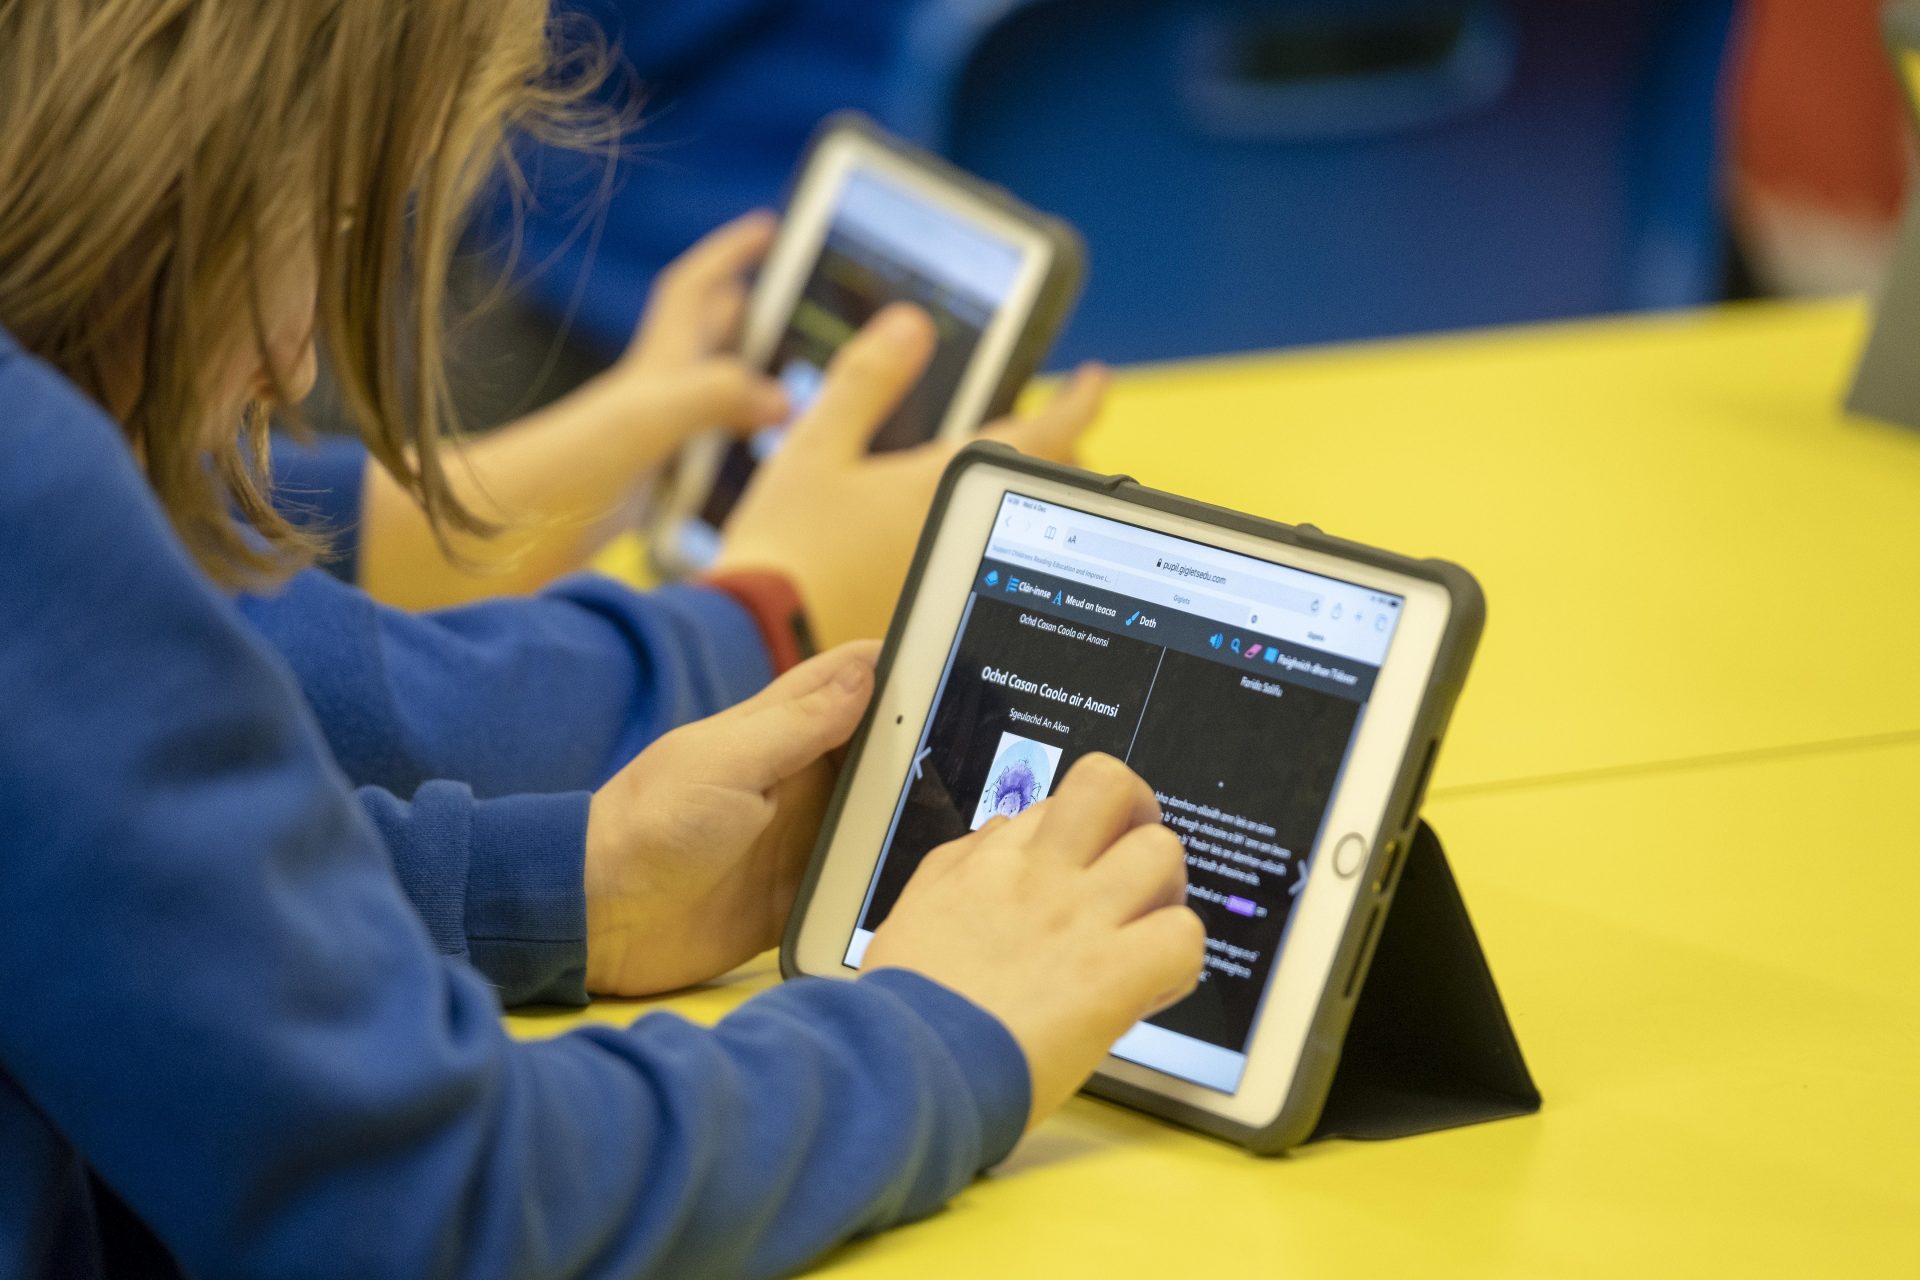 Picture: Primary school pupils doing school work on iPads.